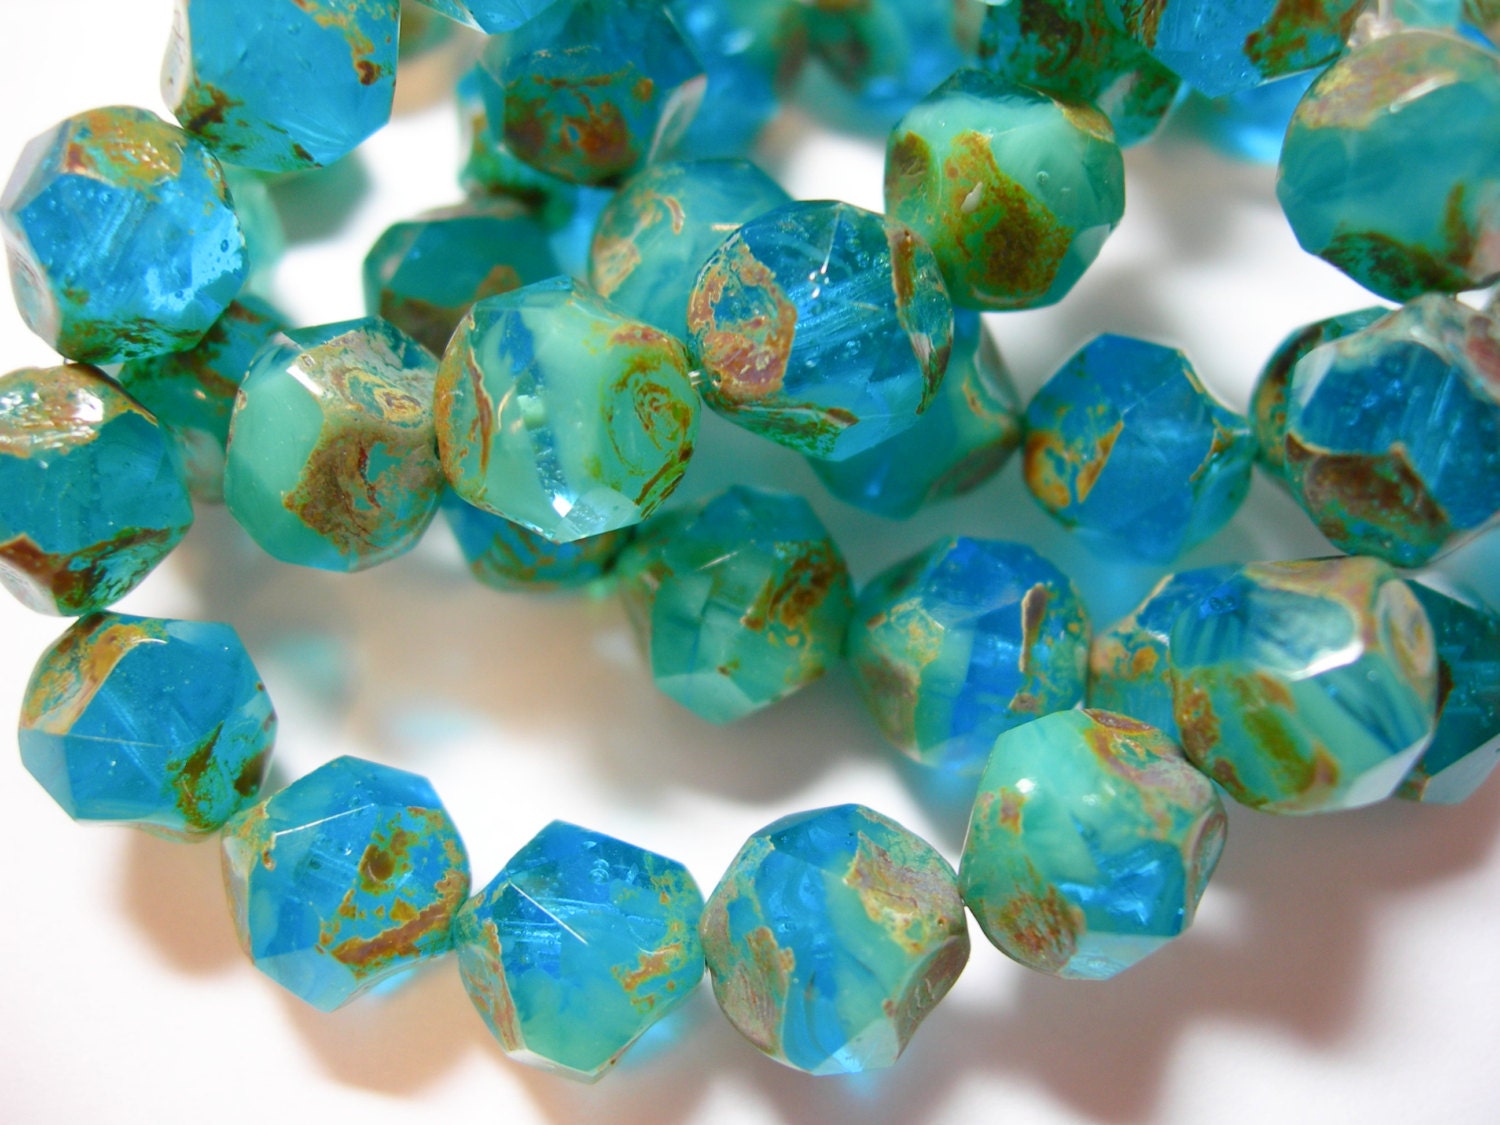 15 9mm Aqua Blend Picasso Faceted Firepolished Thru Cuts Czech Glass Beads